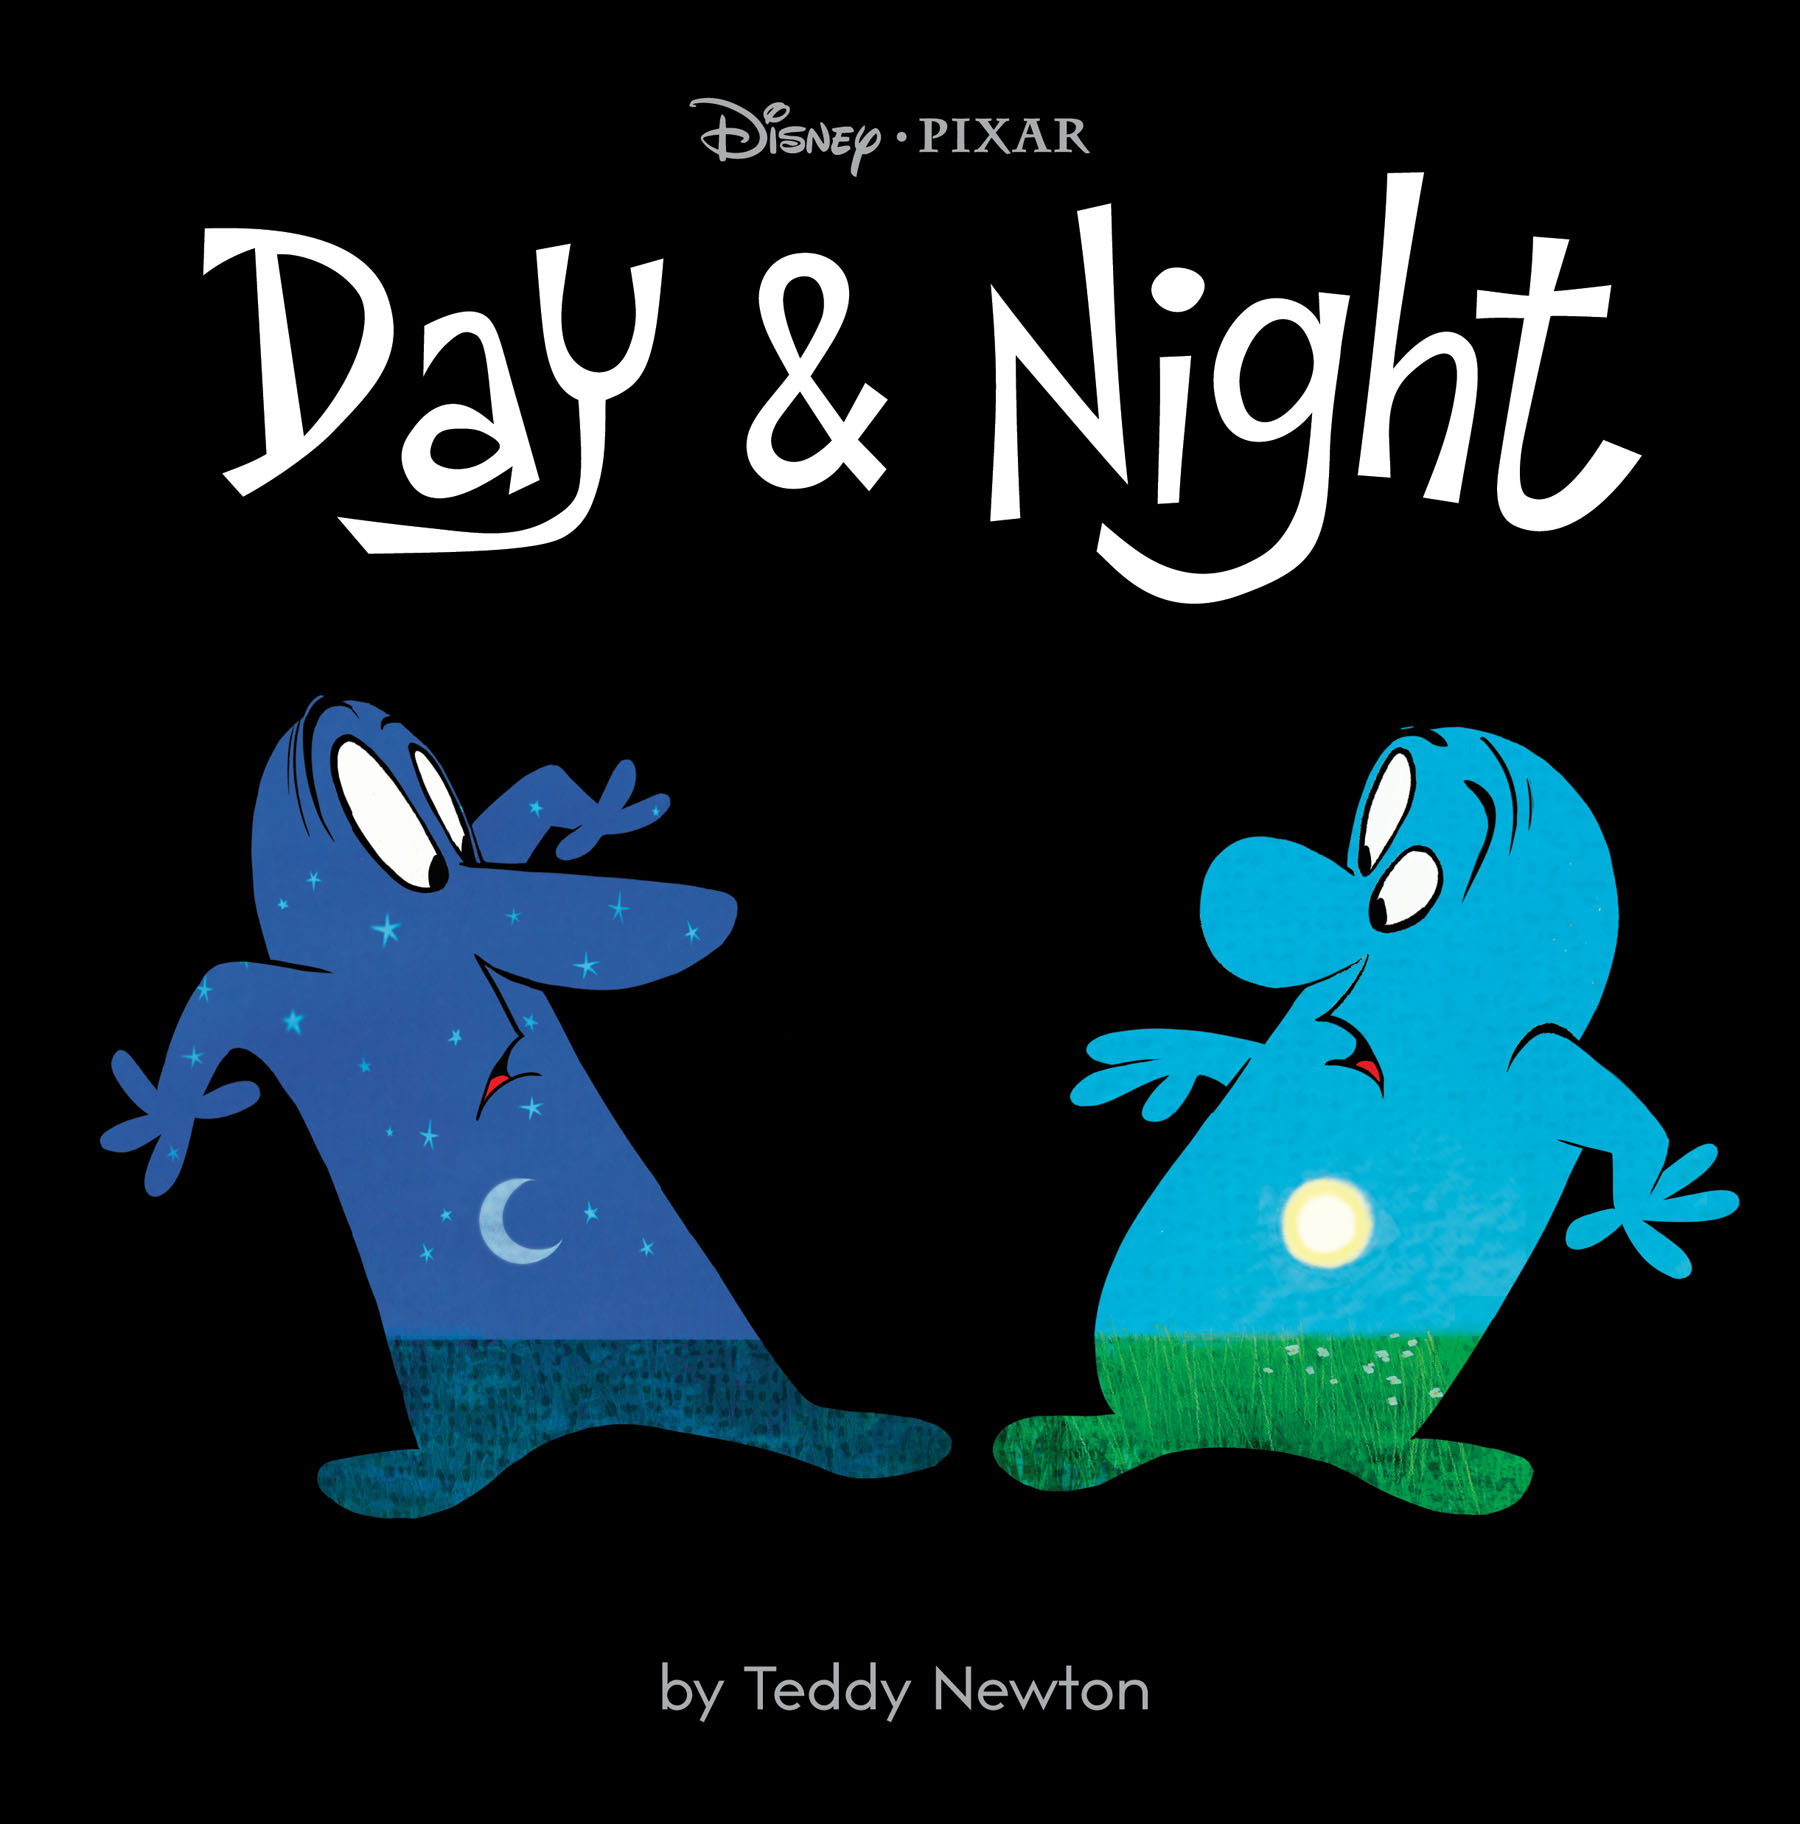 Day & Night Pixar cover